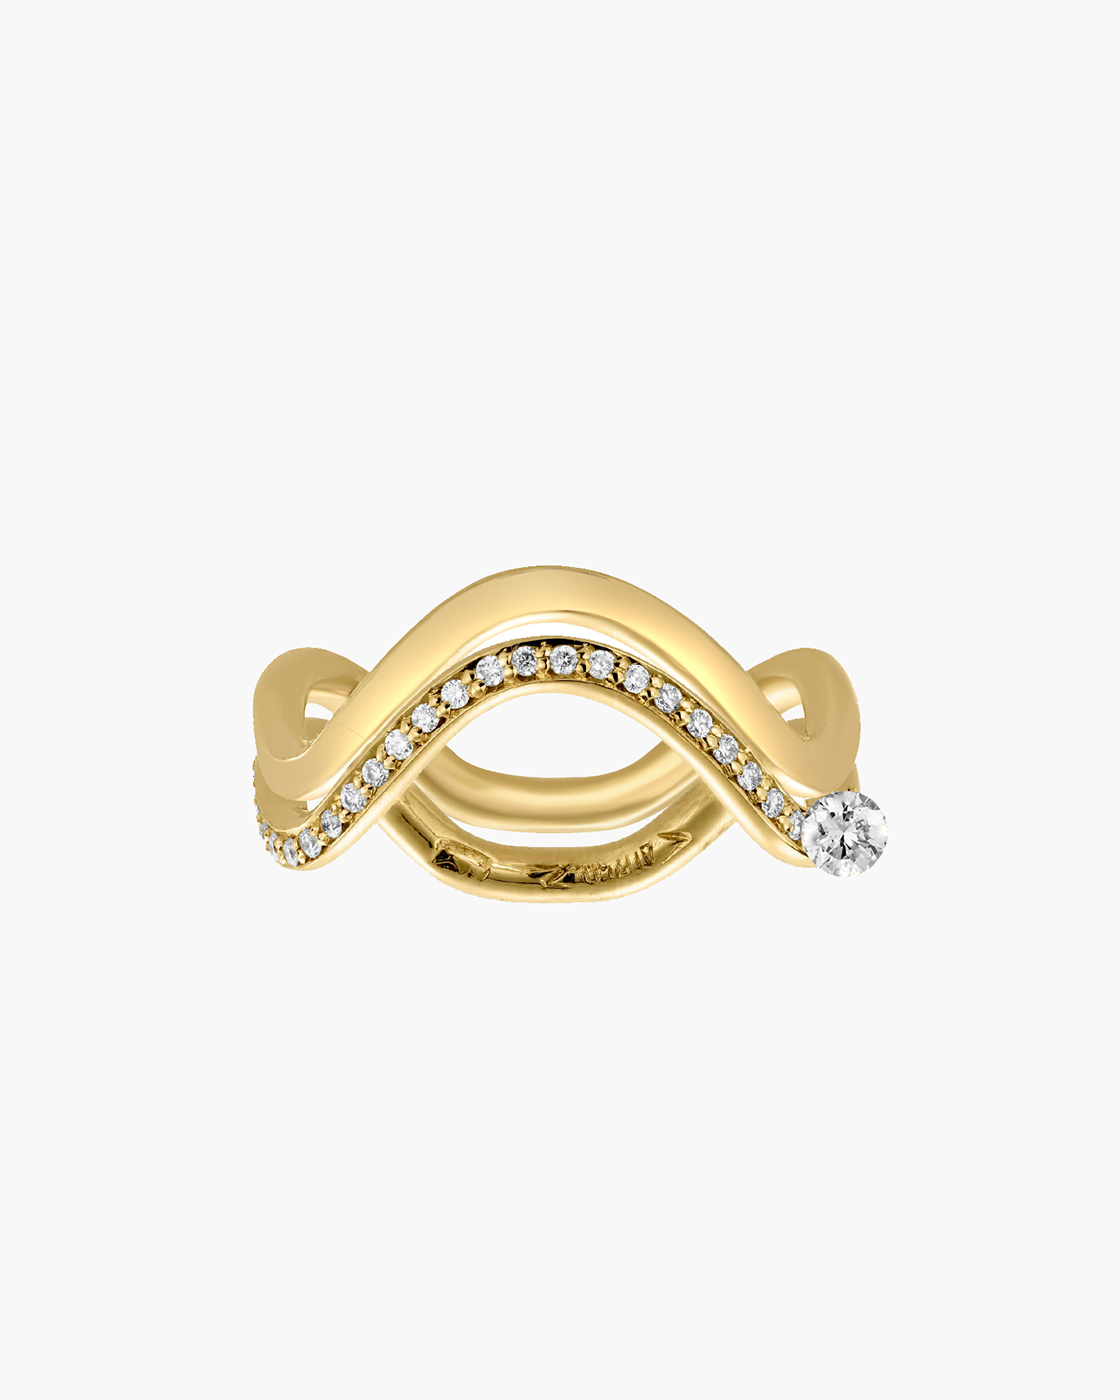 Double Petite Comete 18k Yellow Gold Round Brilliant Diamond Ring